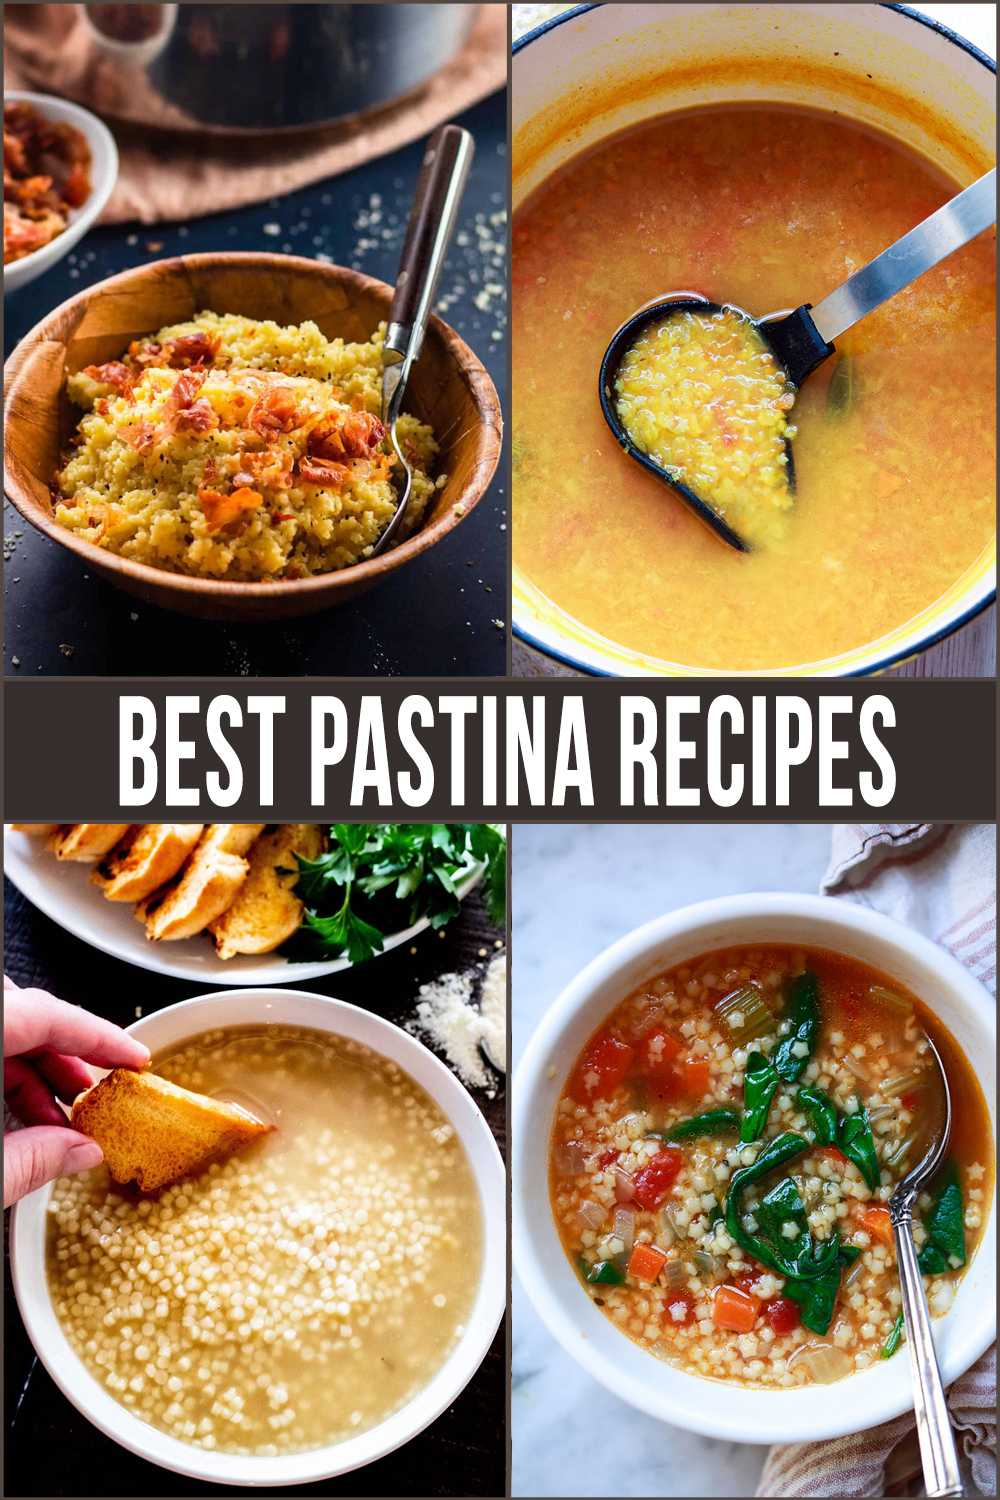 The Best Pastina Recipes